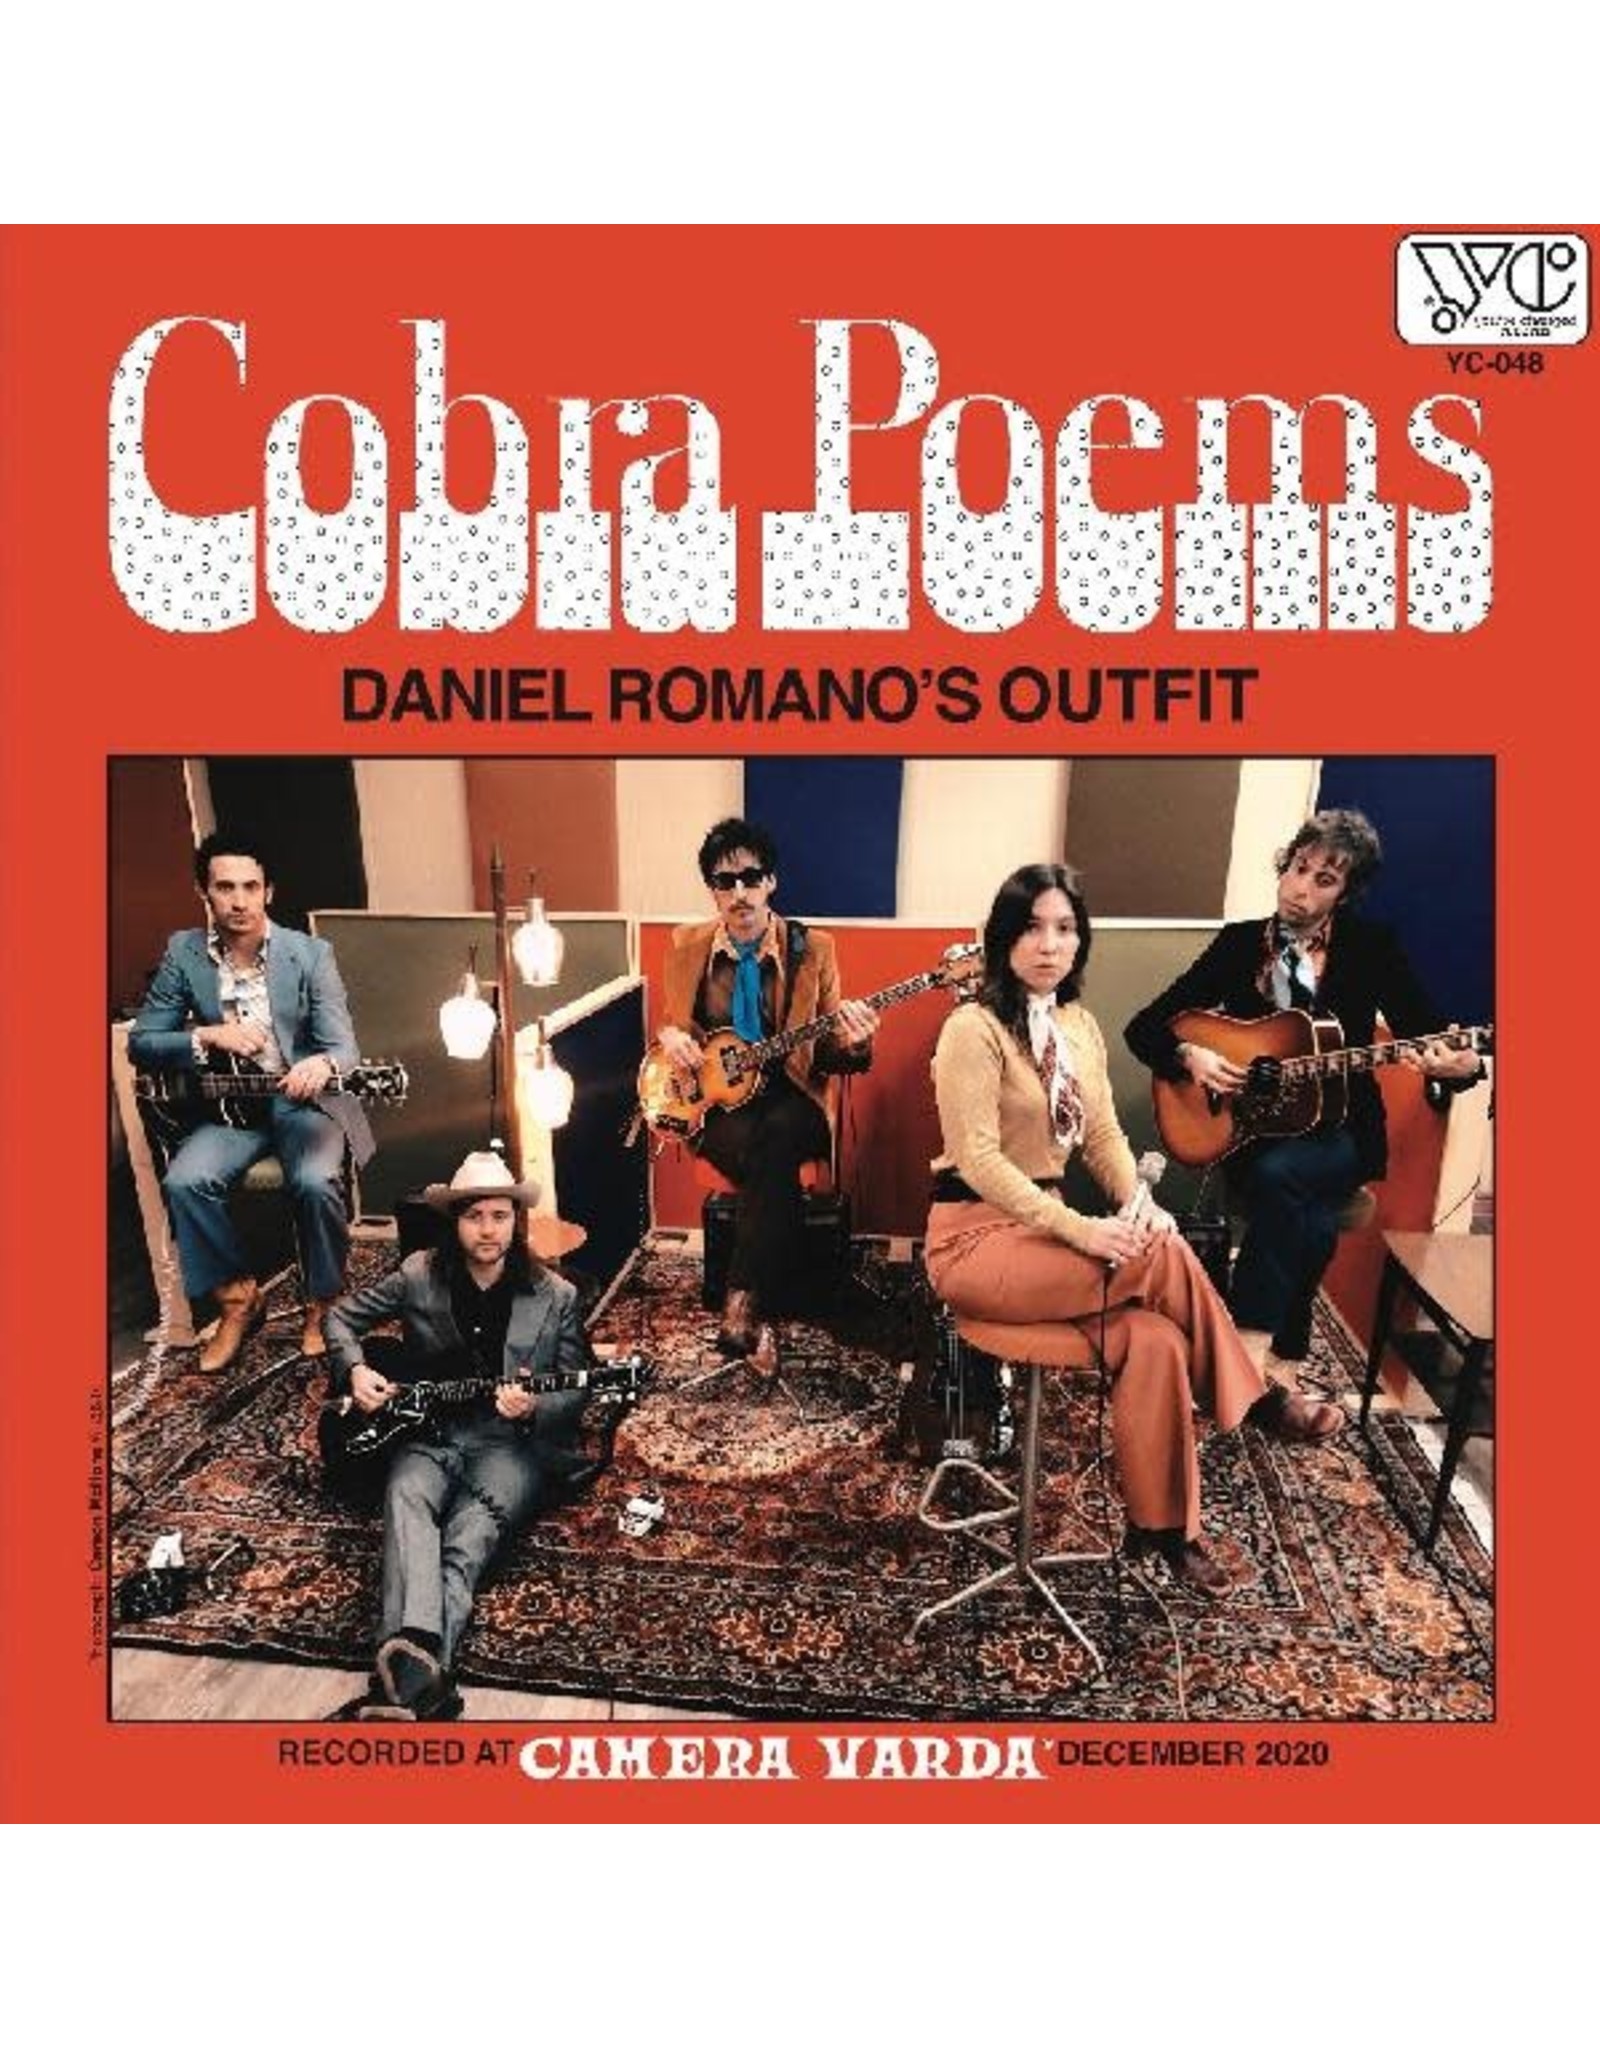 You've Changed Romano, Daniel: Cobra Poems LP